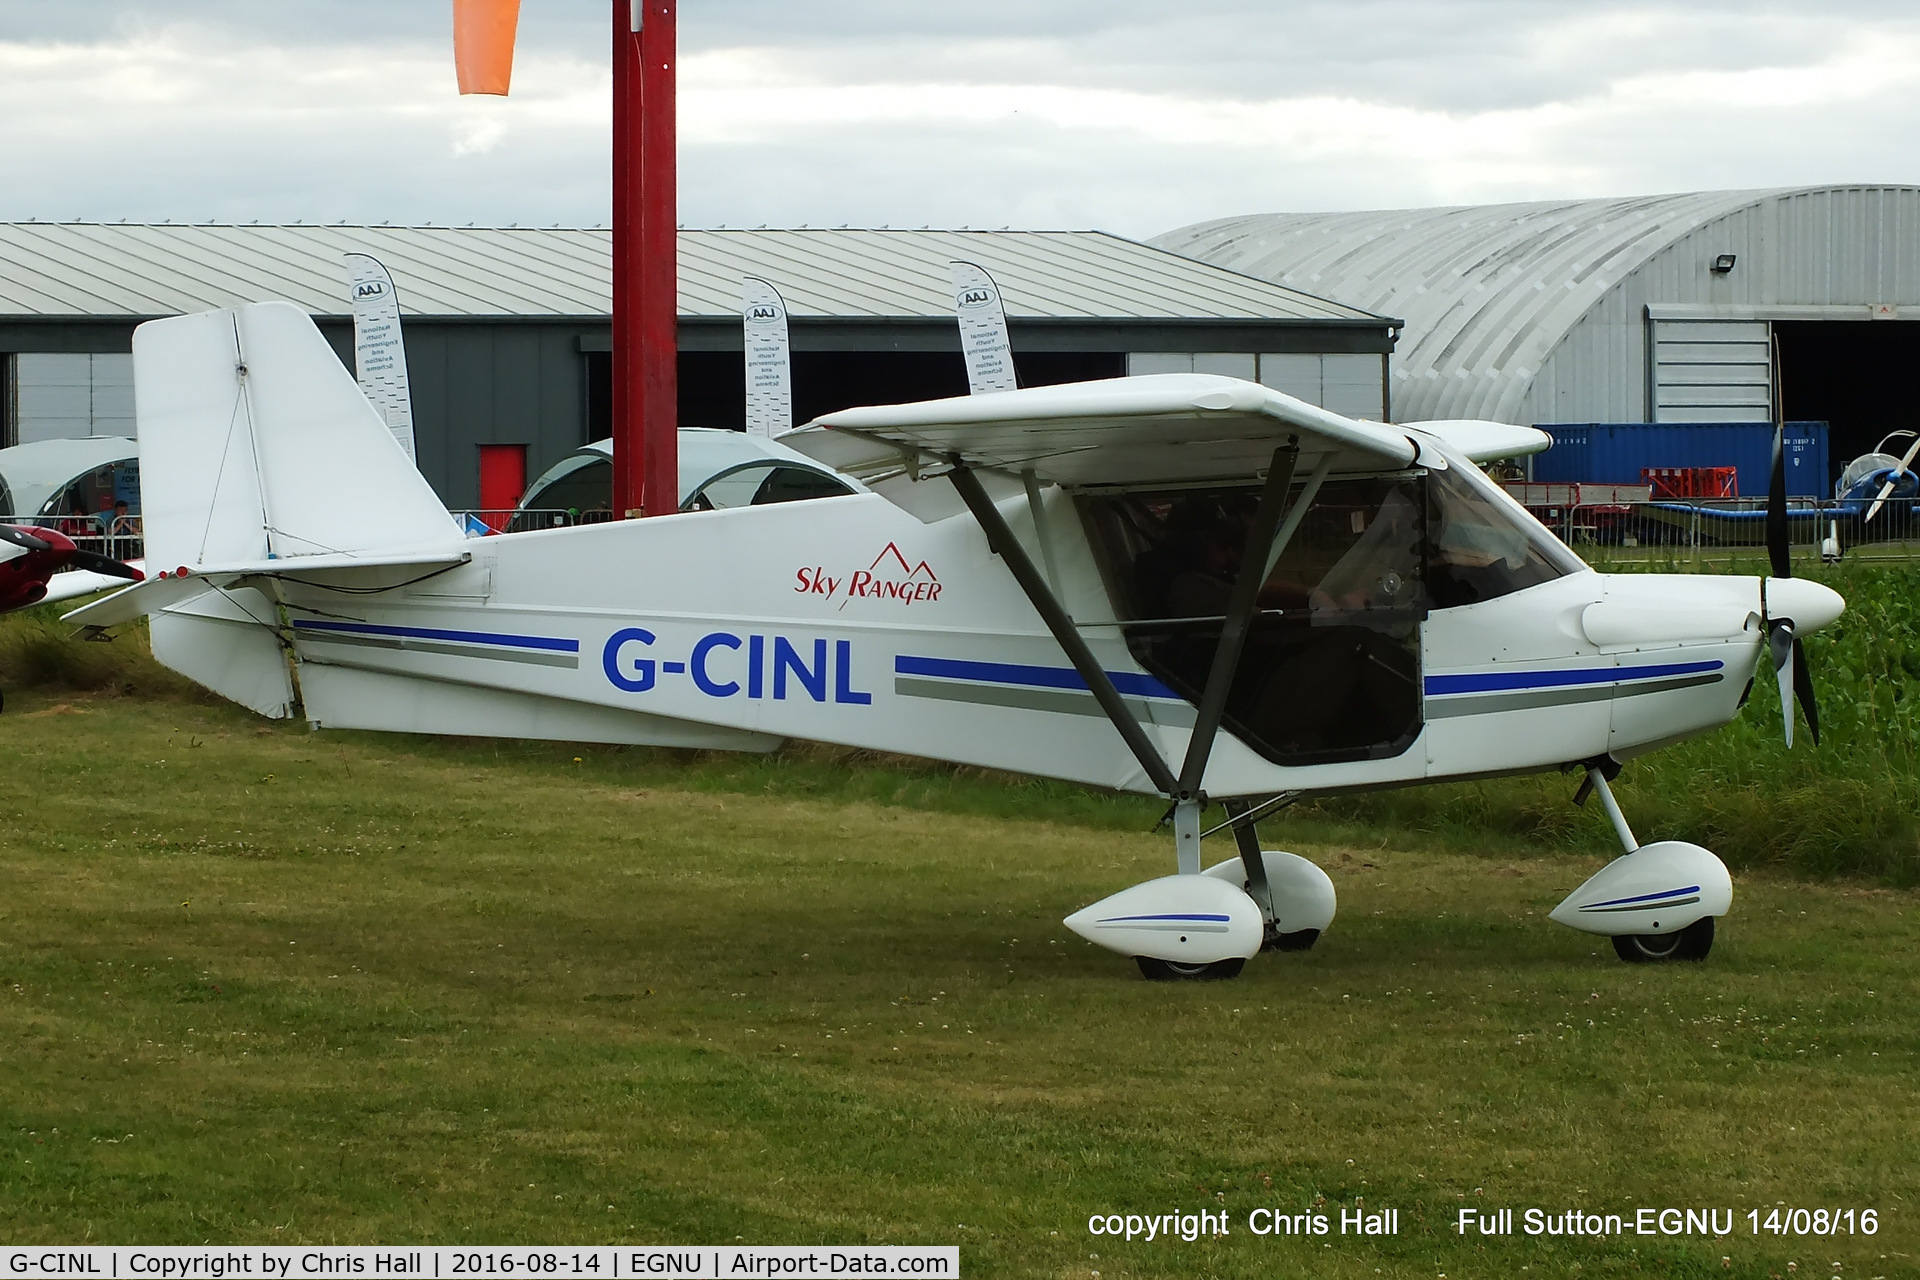 G-CINL, 2015 Skyranger Swift 912S(1) C/N BMAA/HB/647, at the LAA Vale of York Strut fly-in, Full Sutton